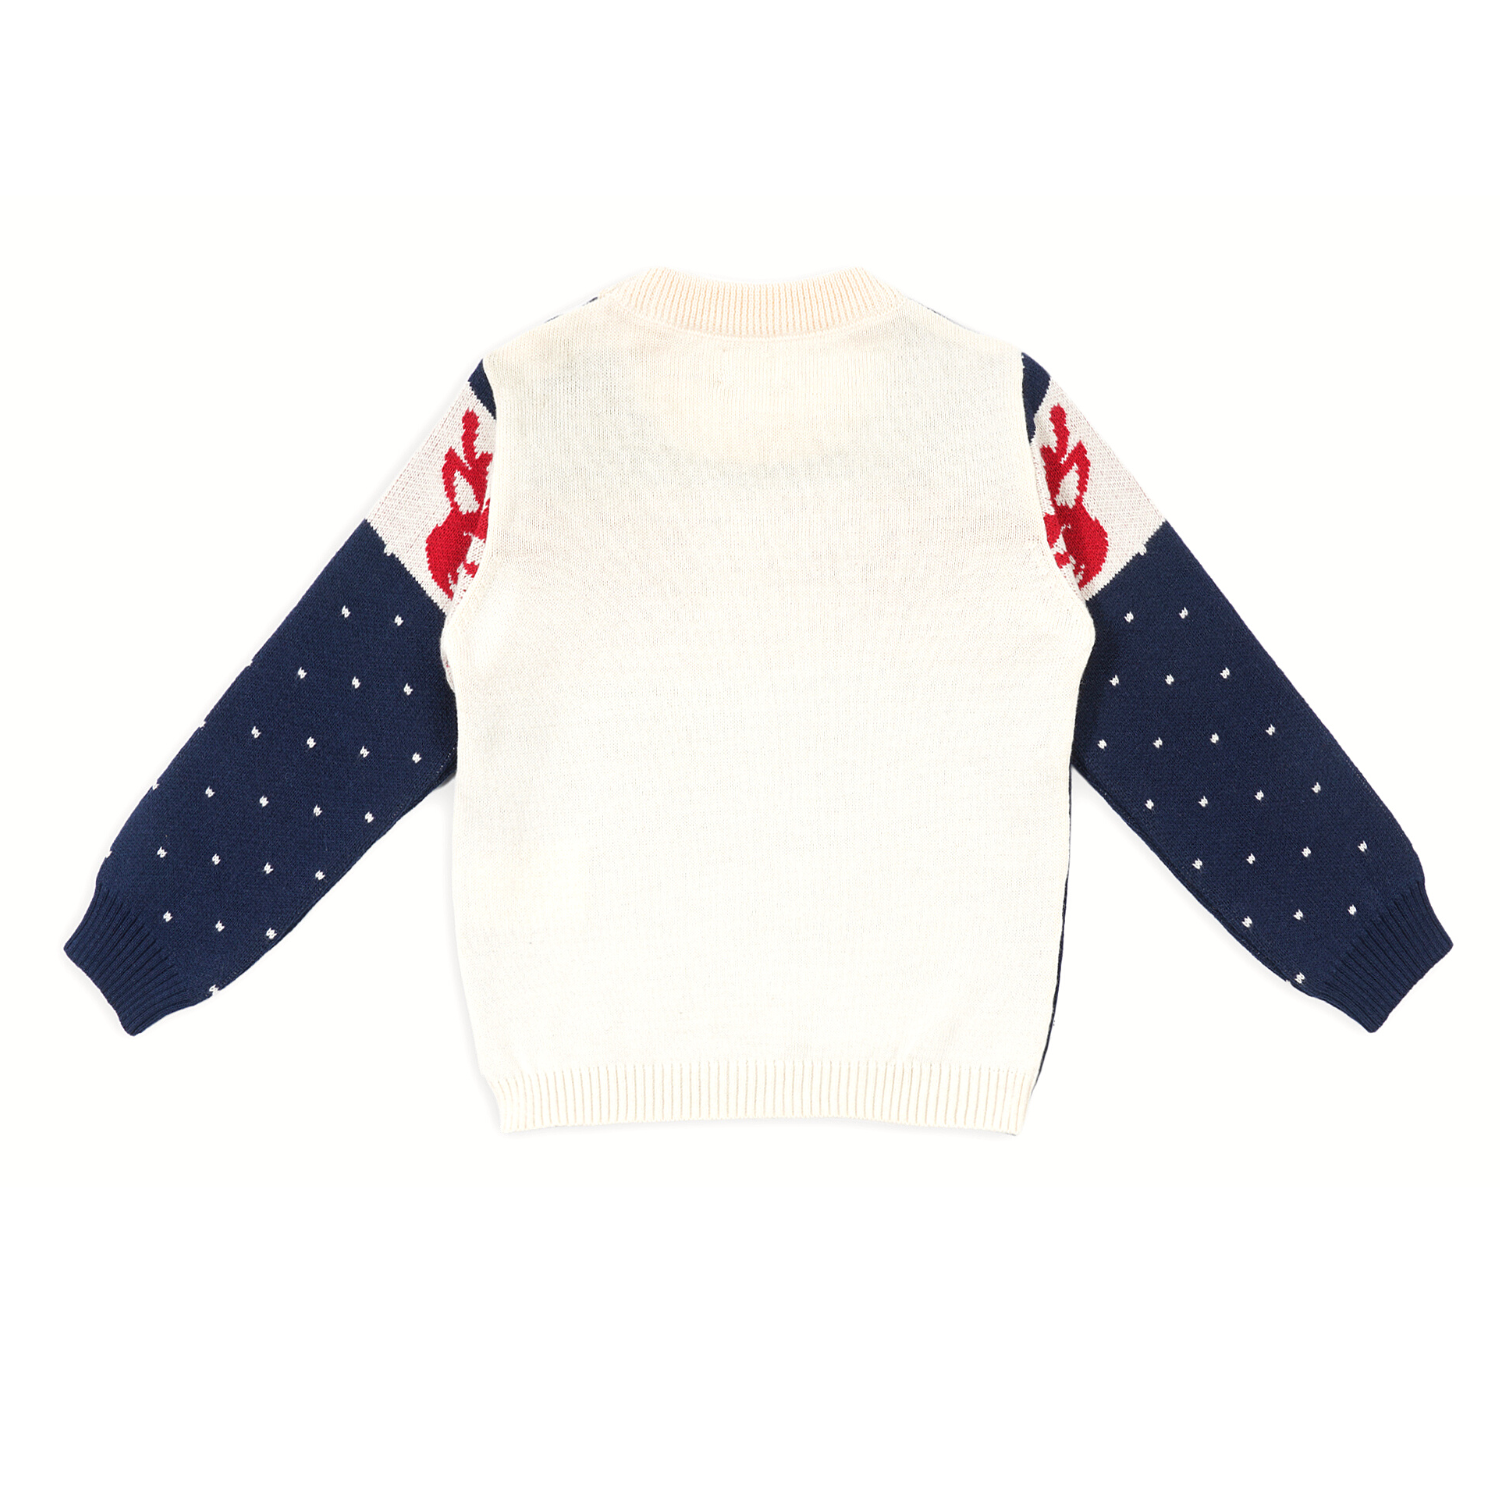 Navy Soulful Reindeer Jacquard Sweater Set